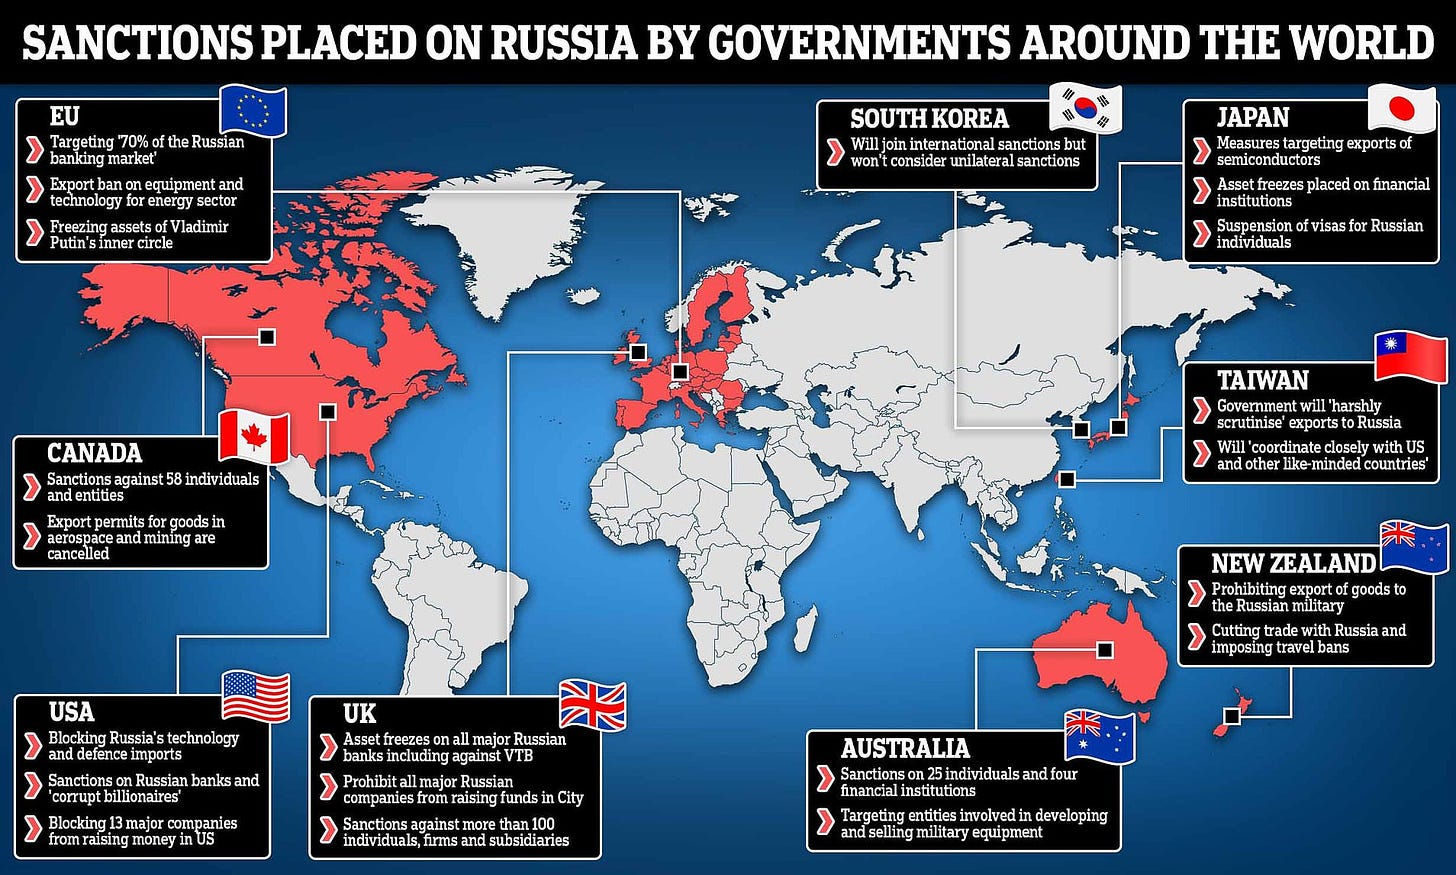 Isn’t the rest of the world sitting idle while Putin decimates Ukraine ...